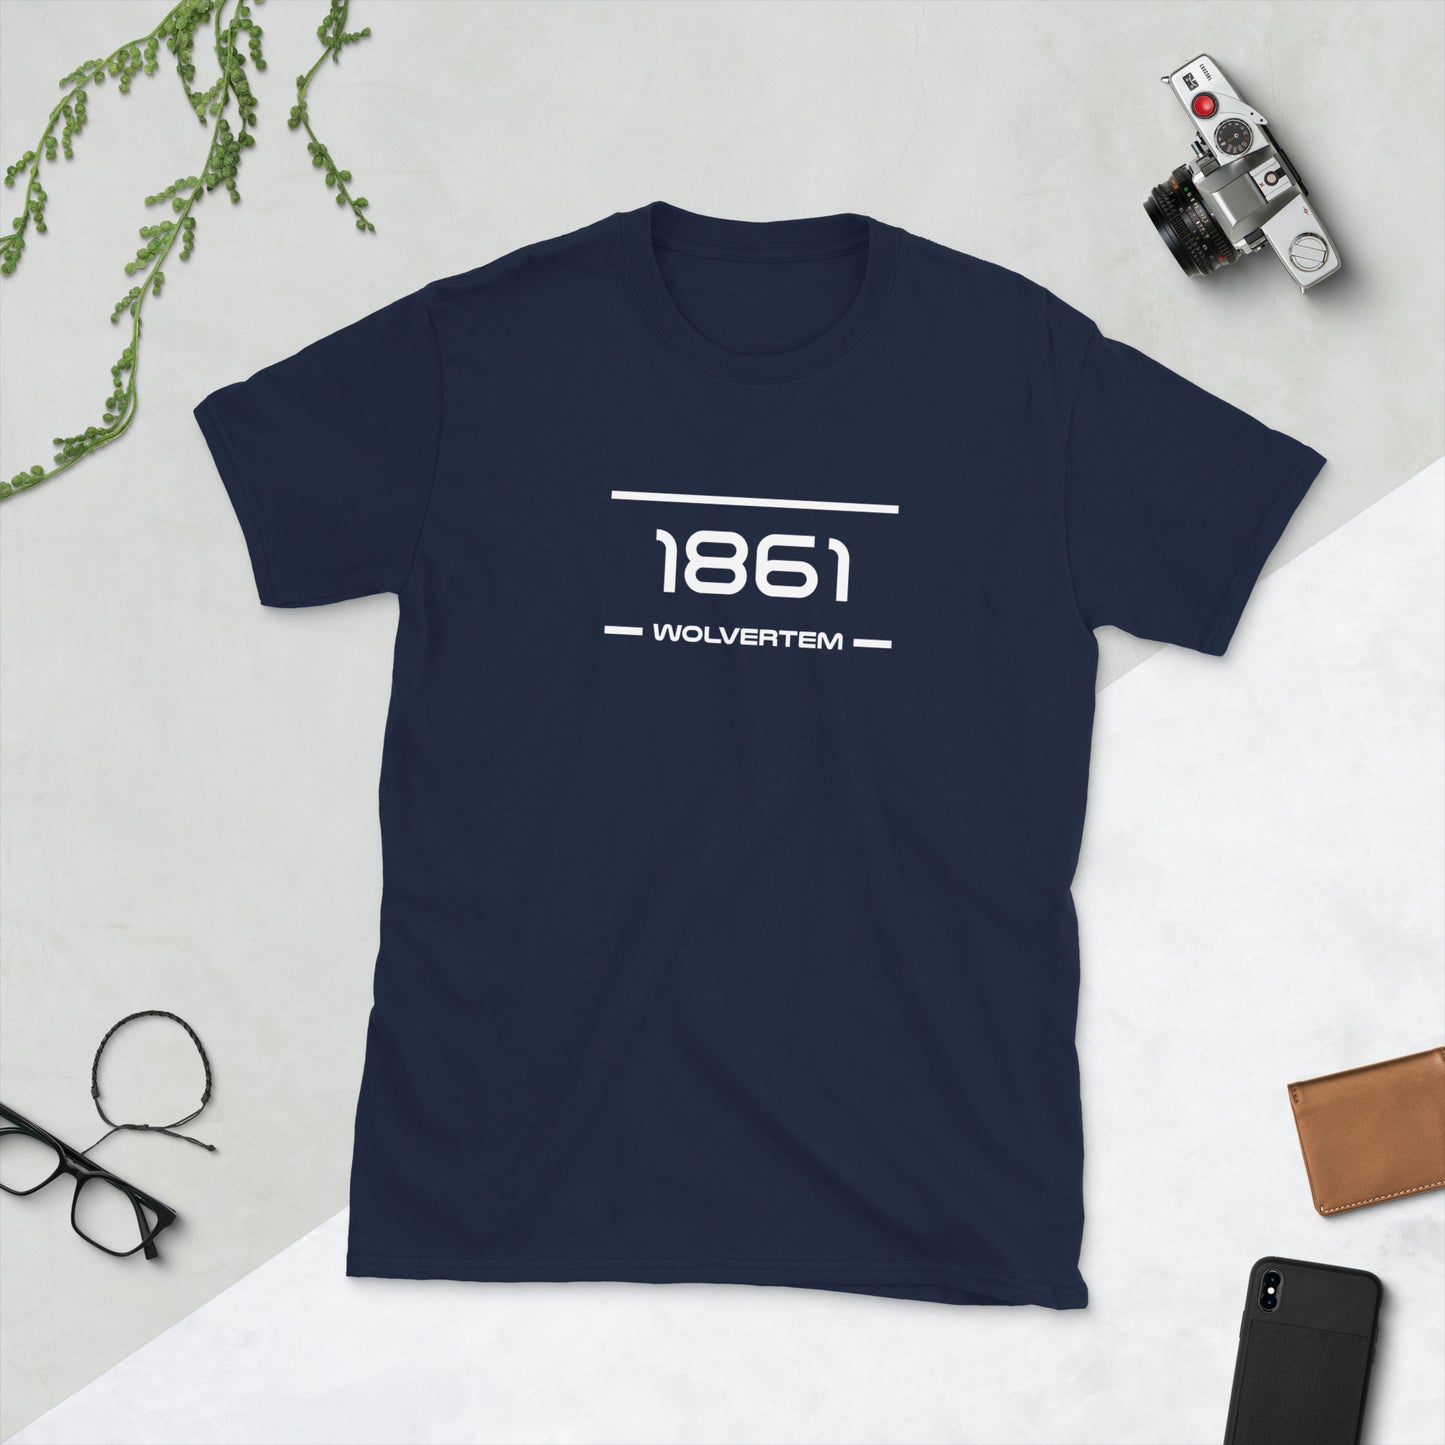 Tshirt - 1861 - Wolvertem